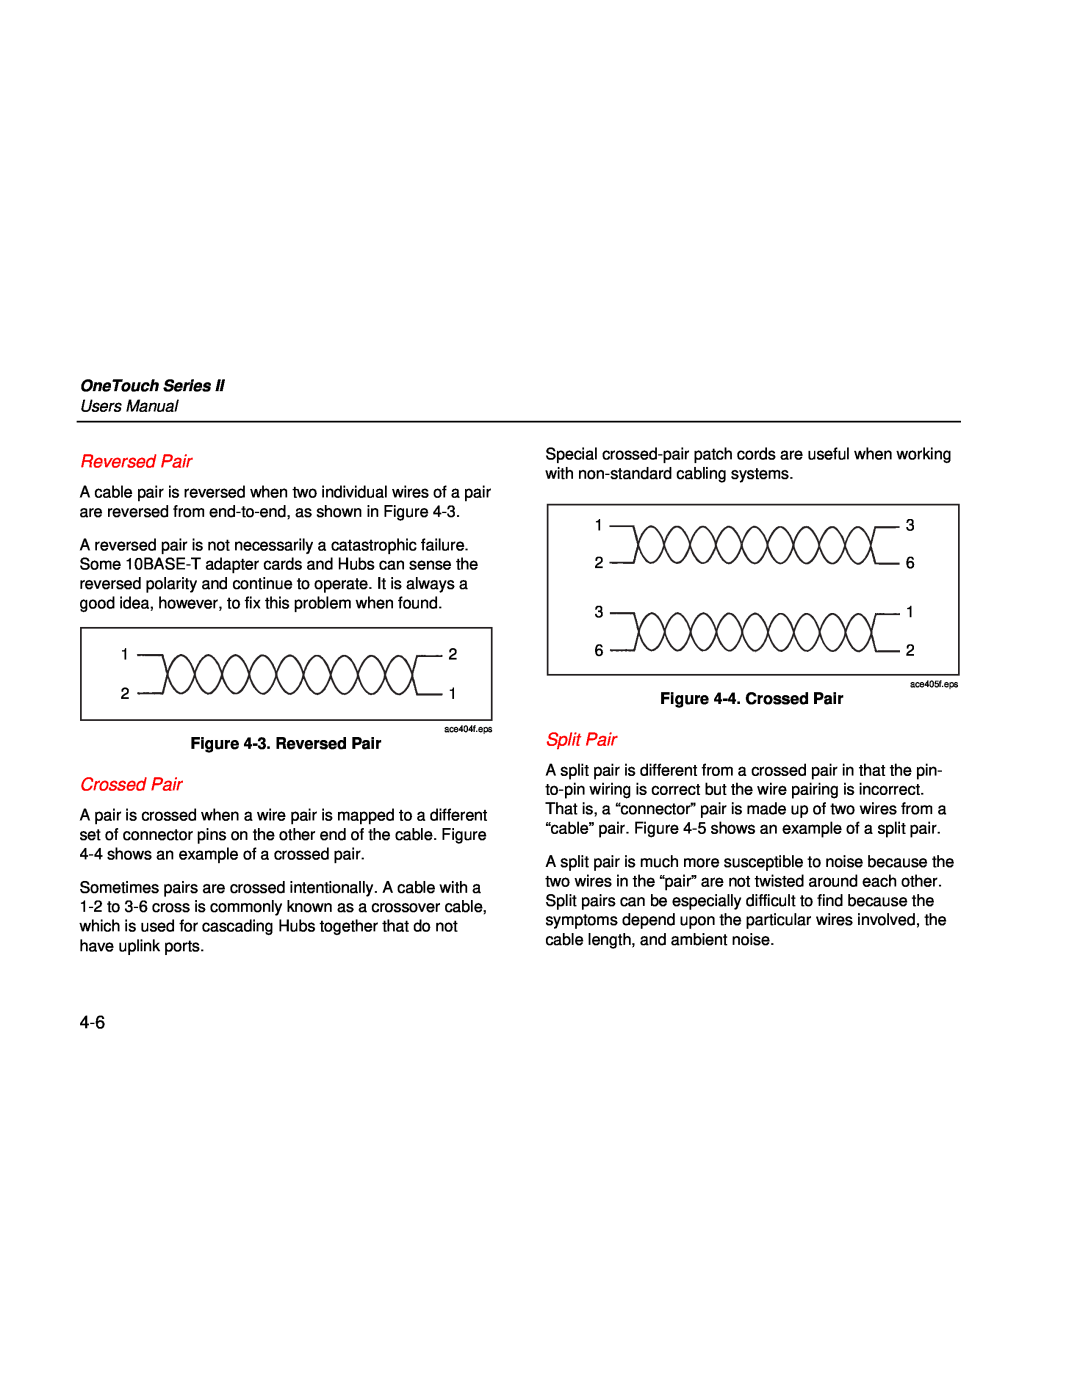 Fluke Series II user manual Split Pair, OneTouch Series, Users Manual, 3. Reversed Pair, 4. Crossed Pair 